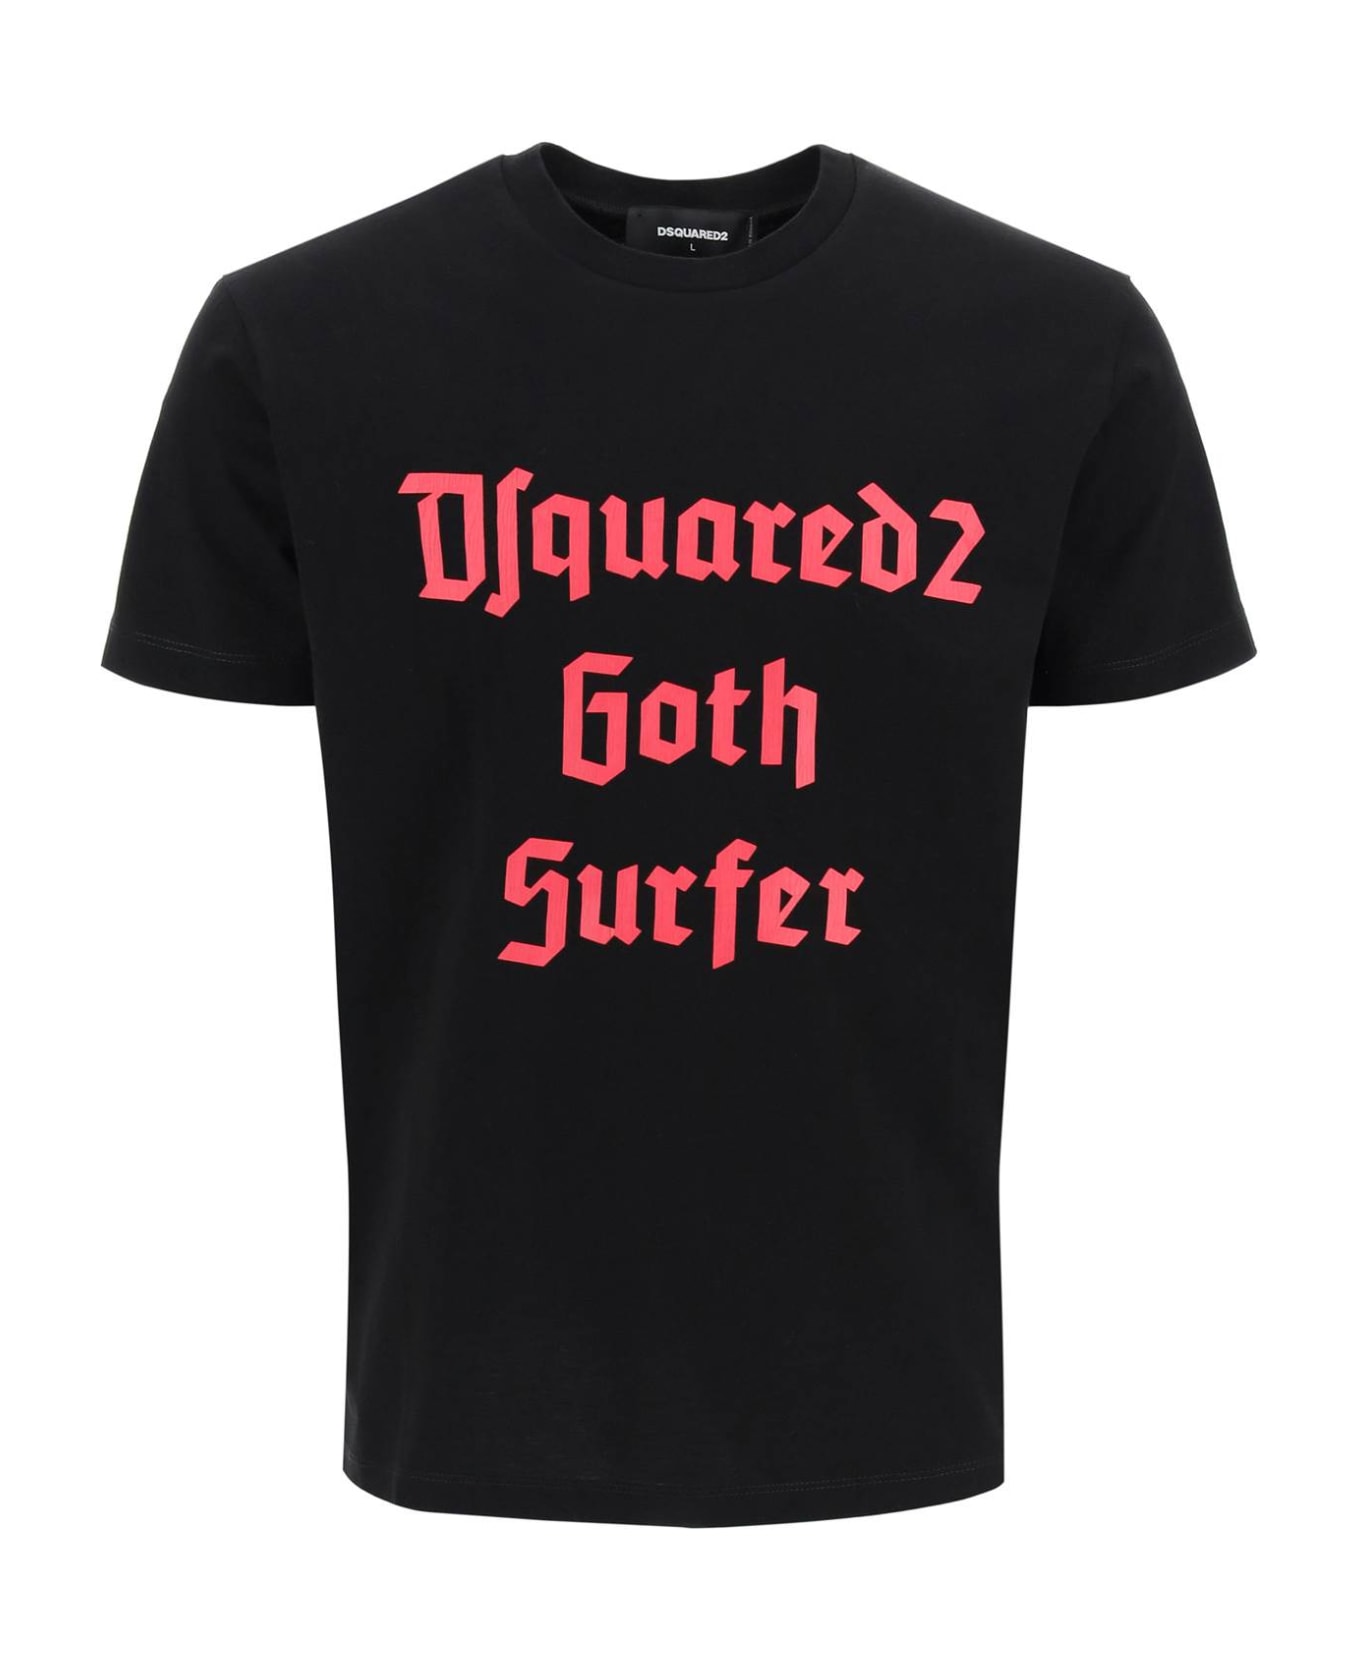 Dsquared2 Goth Surfer T-shirt - Black シャツ